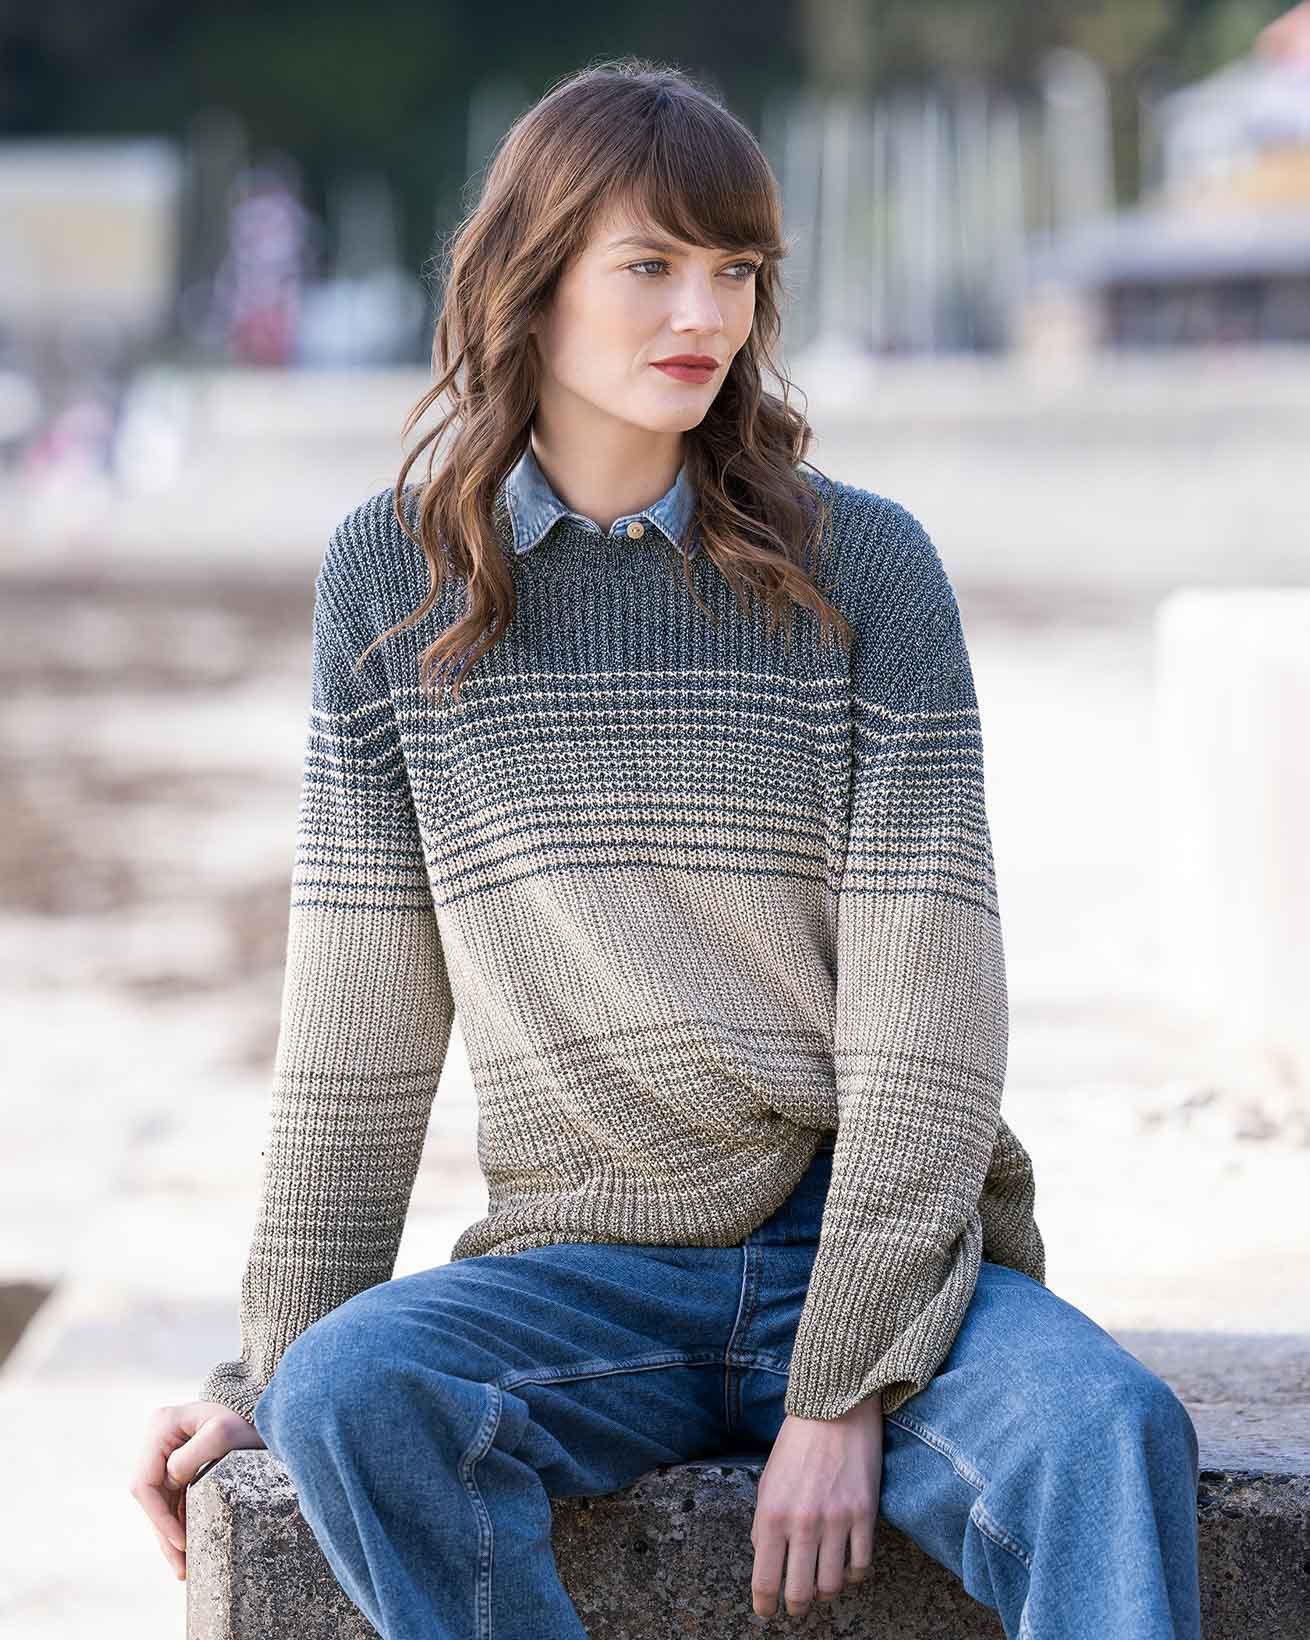 Gradient Stripe Sweater